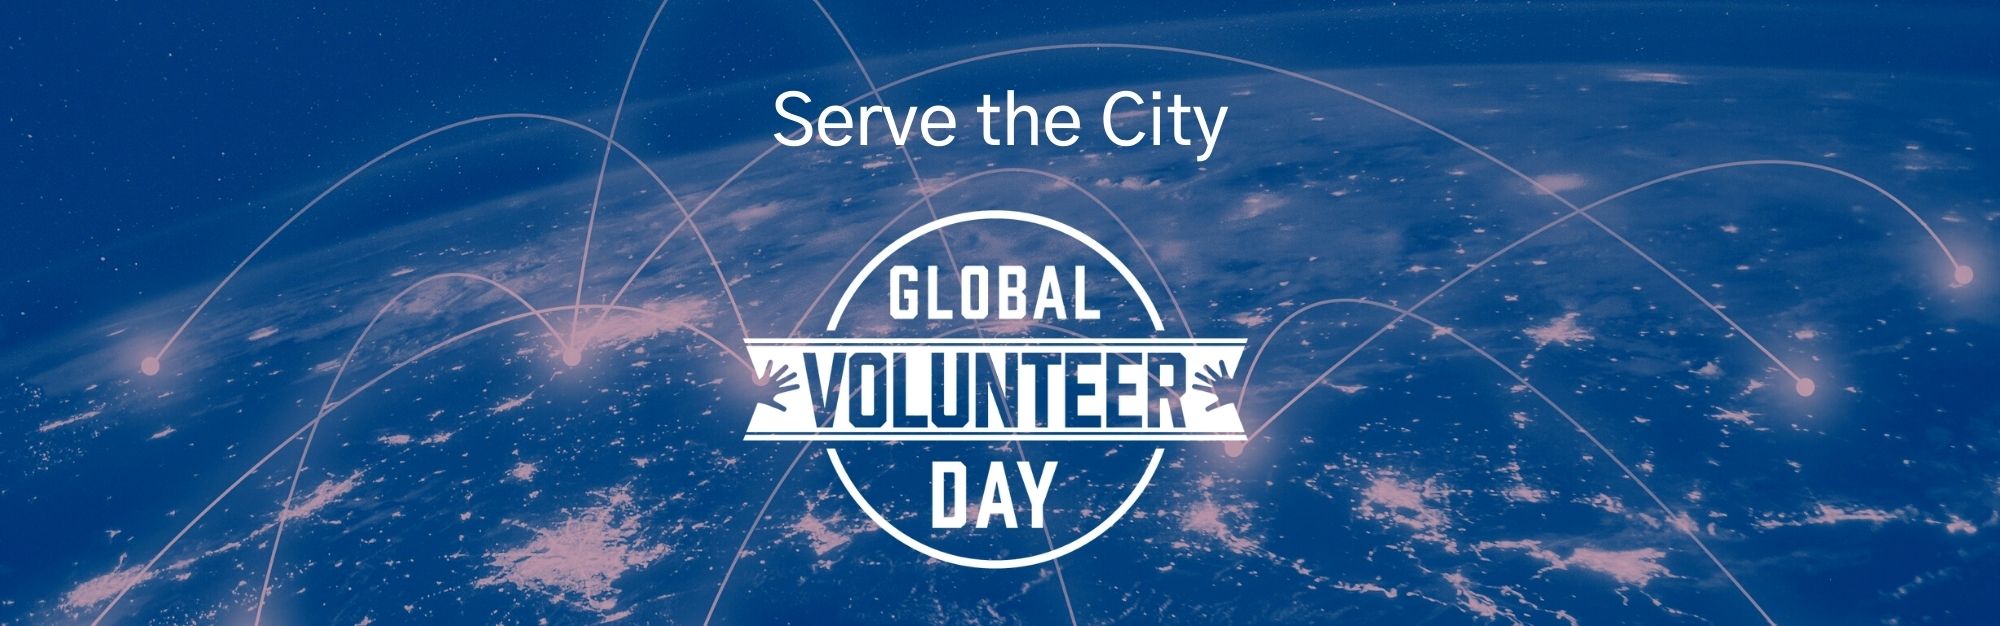 Global Volunteer Day Serve the City International